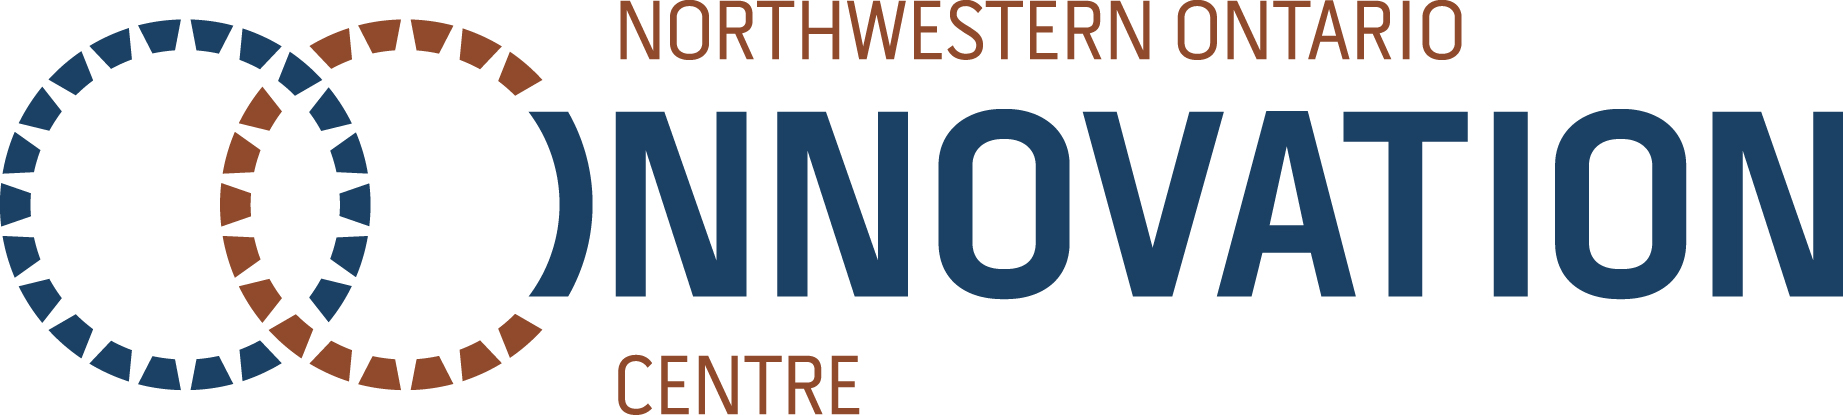 Northwestern Ontario Innovation Centre Logo